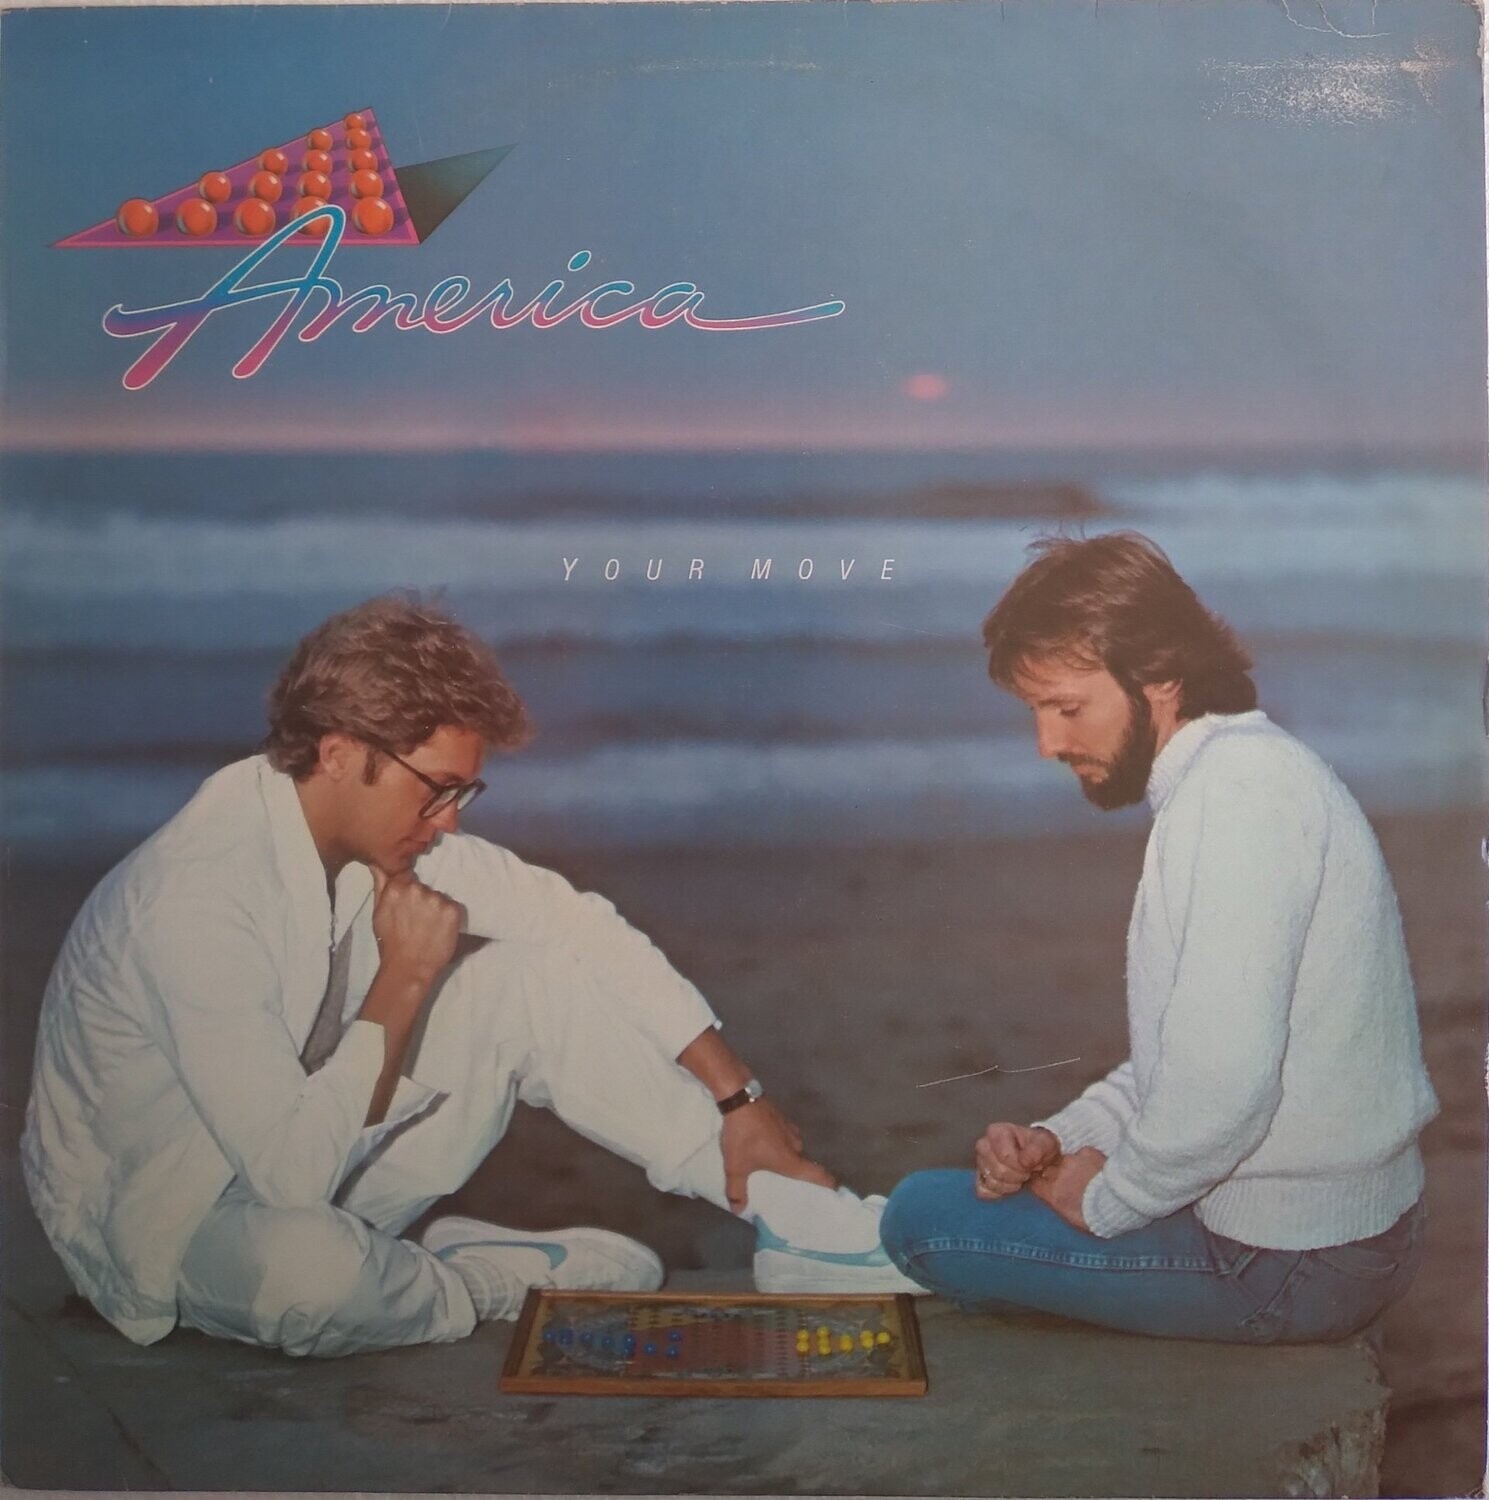 America - Your move (1983)